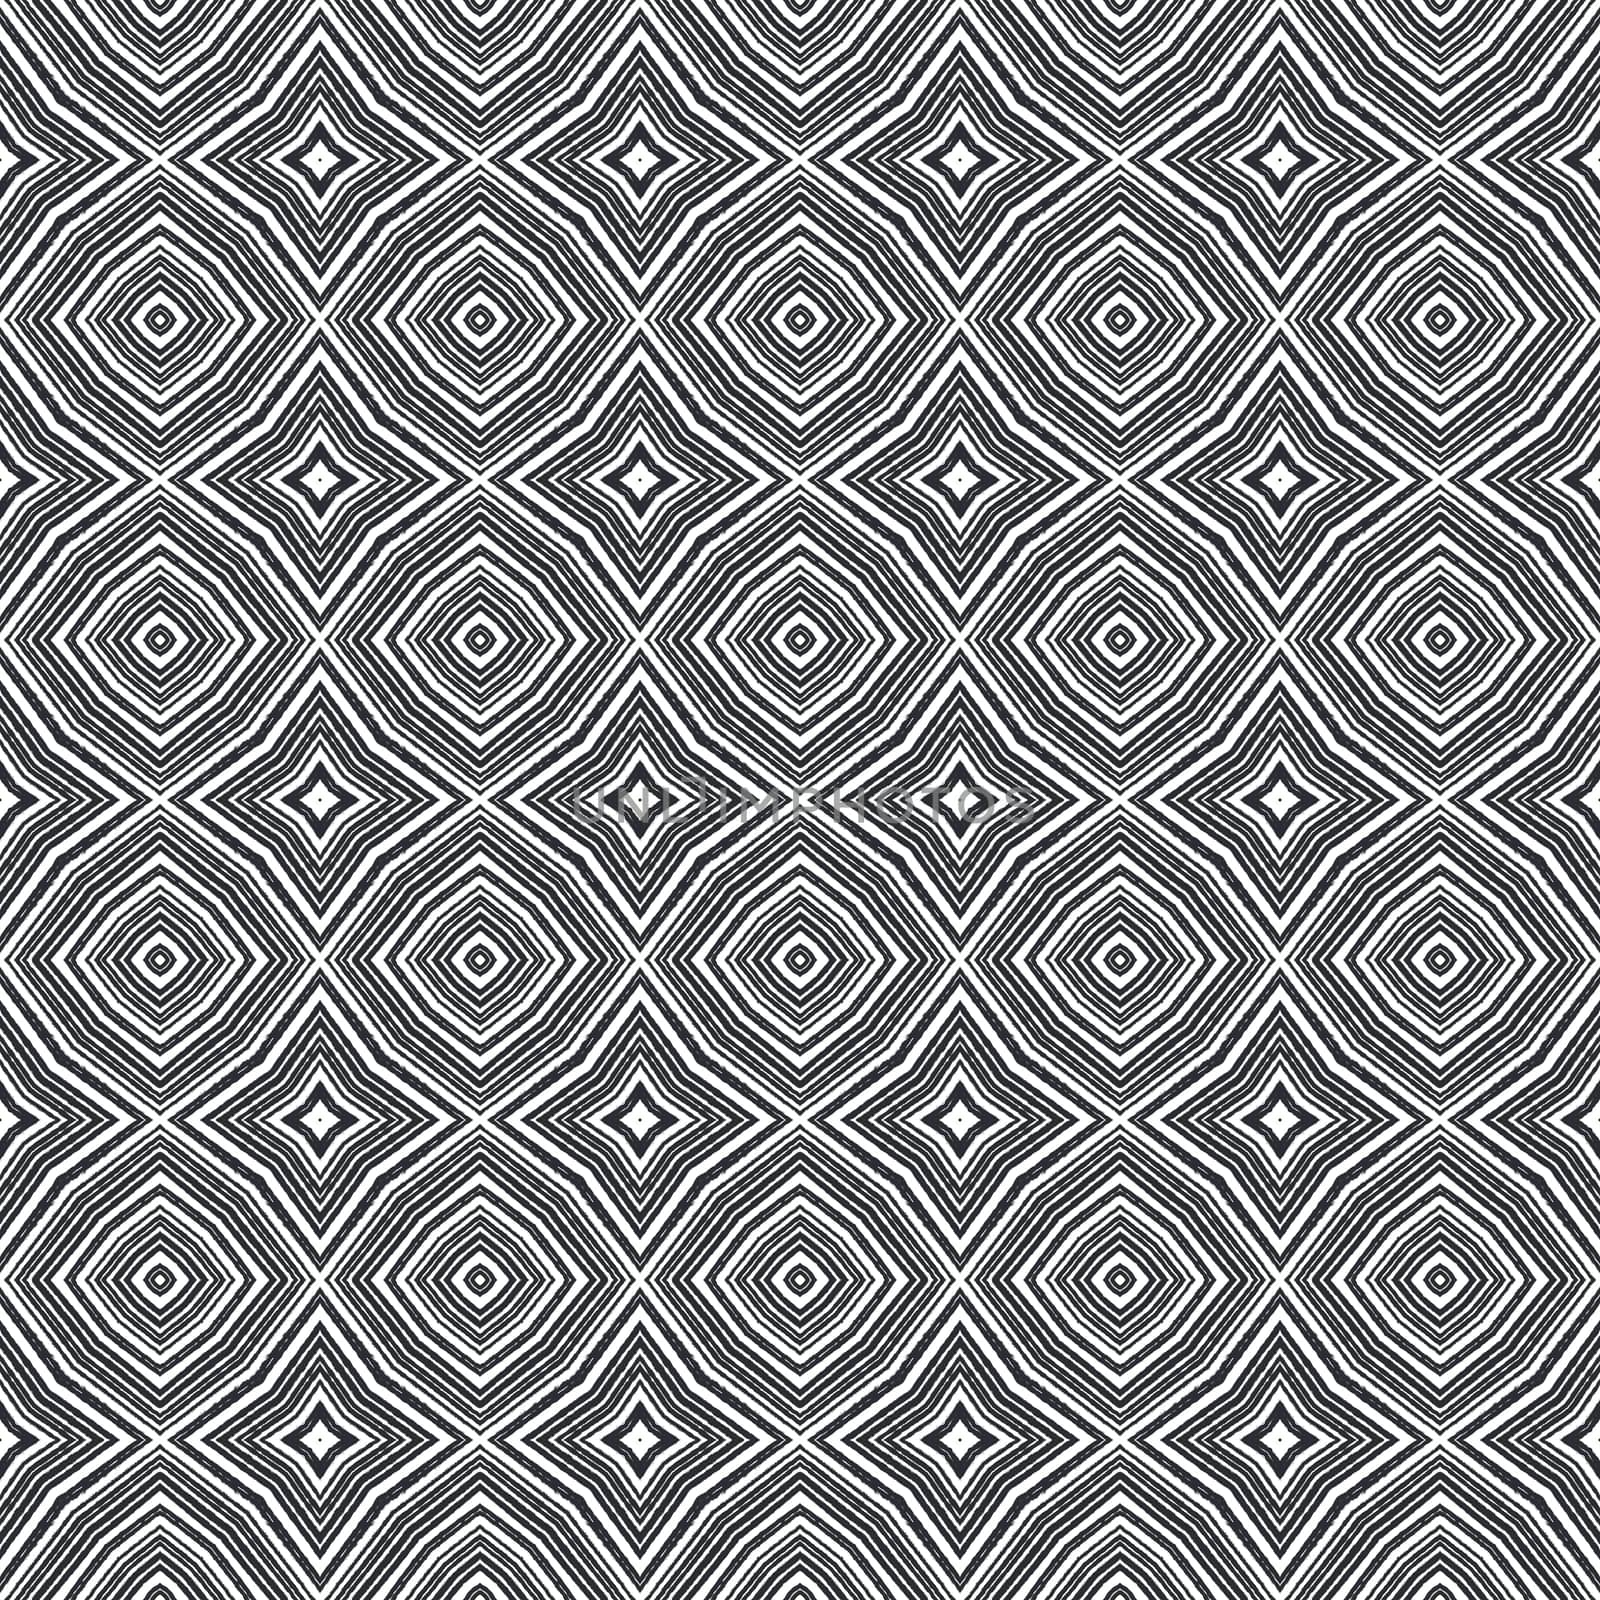 Arabesque hand drawn pattern. Black symmetrical kaleidoscope background. Oriental arabesque hand drawn design. Textile ready resplendent print, swimwear fabric, wallpaper, wrapping.